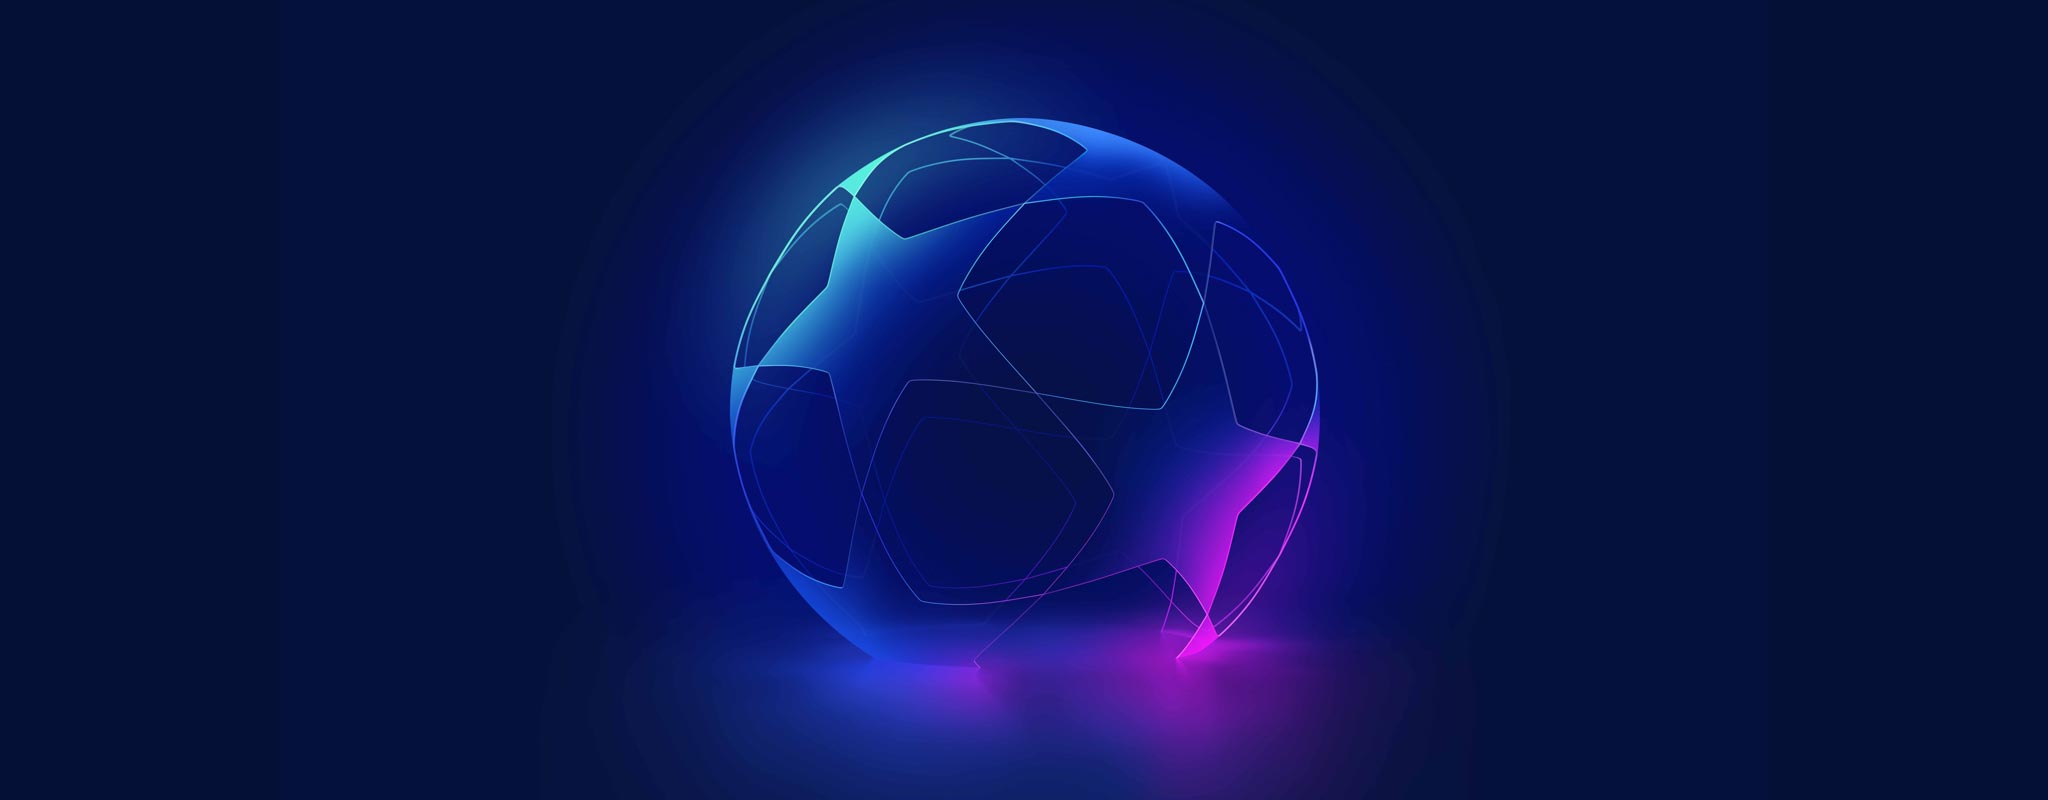 fond d'écran uefa,bleu,bleu électrique,ballon de football,football,monde